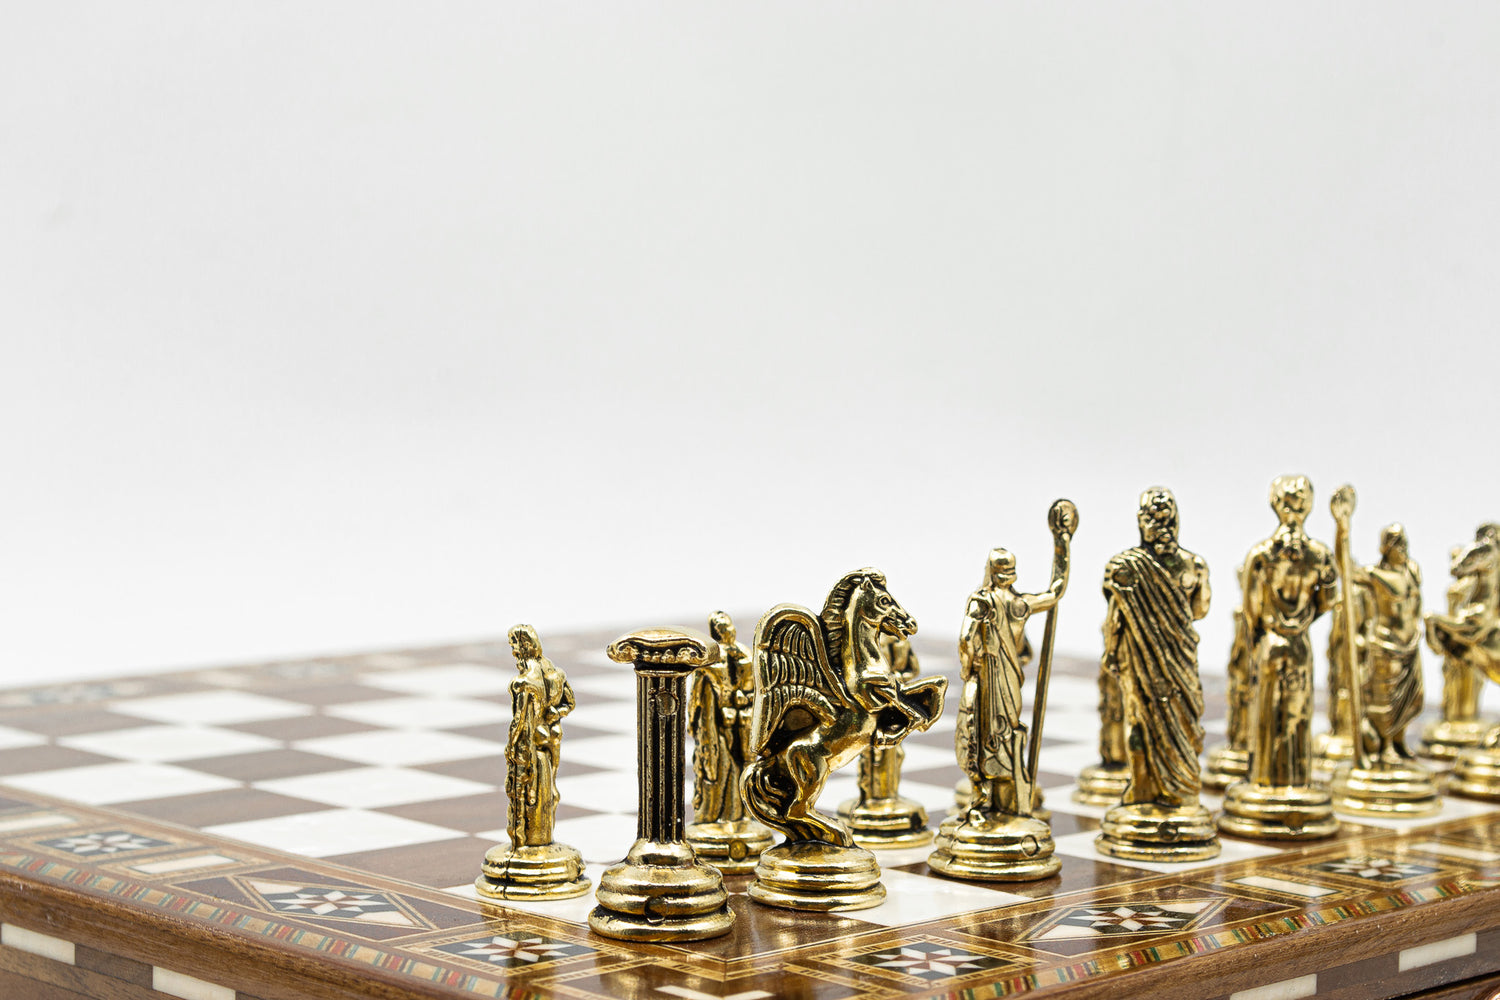 Elite Roman Chess Set - Walnut: Metal & Walnut - Ketohandcraft